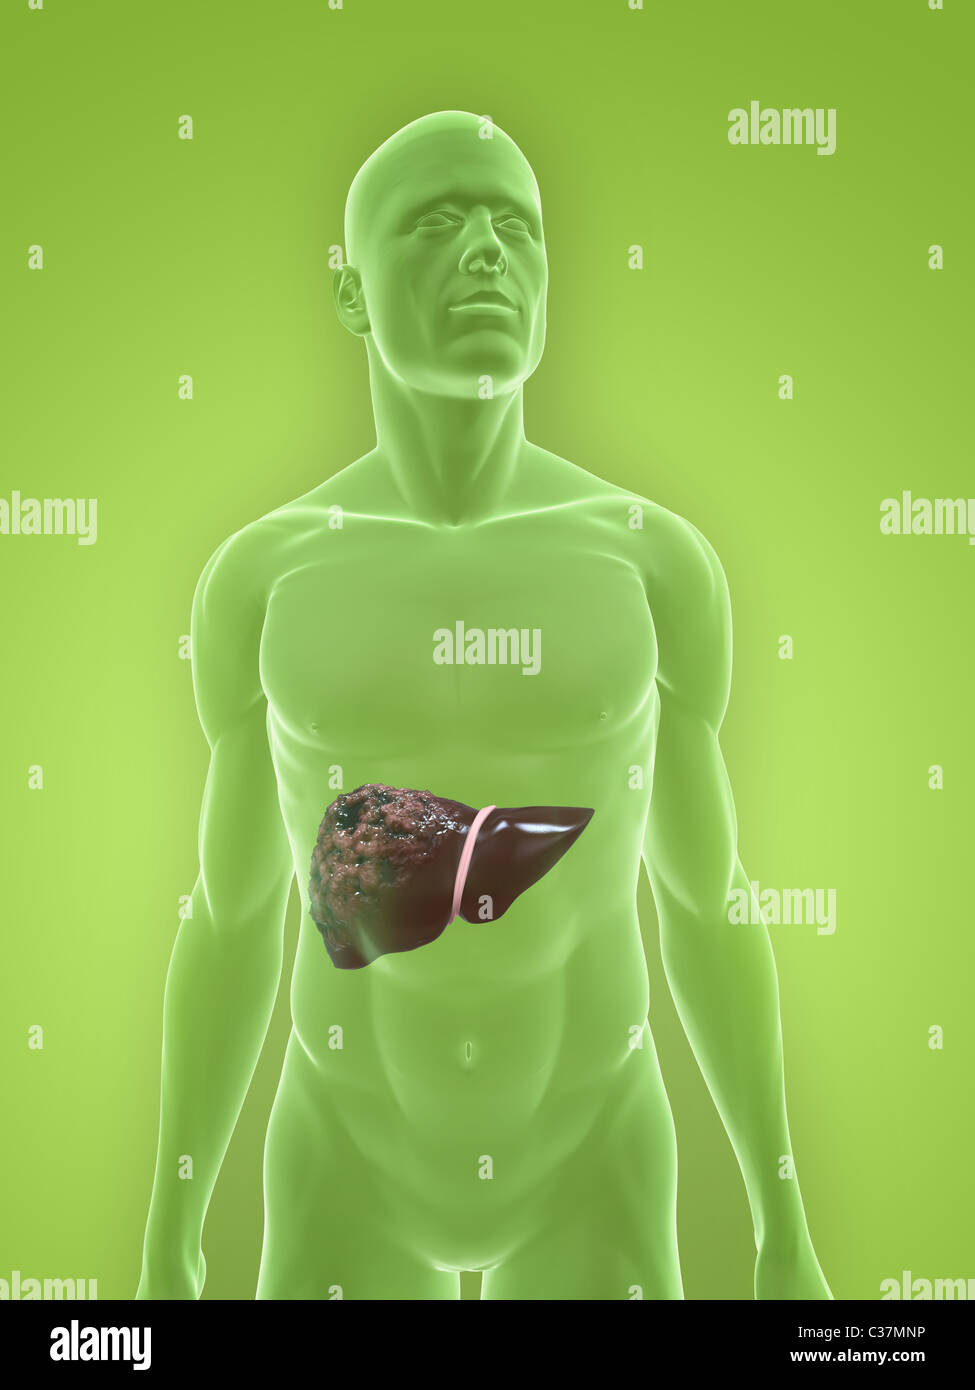 liver cancer Stock Photo